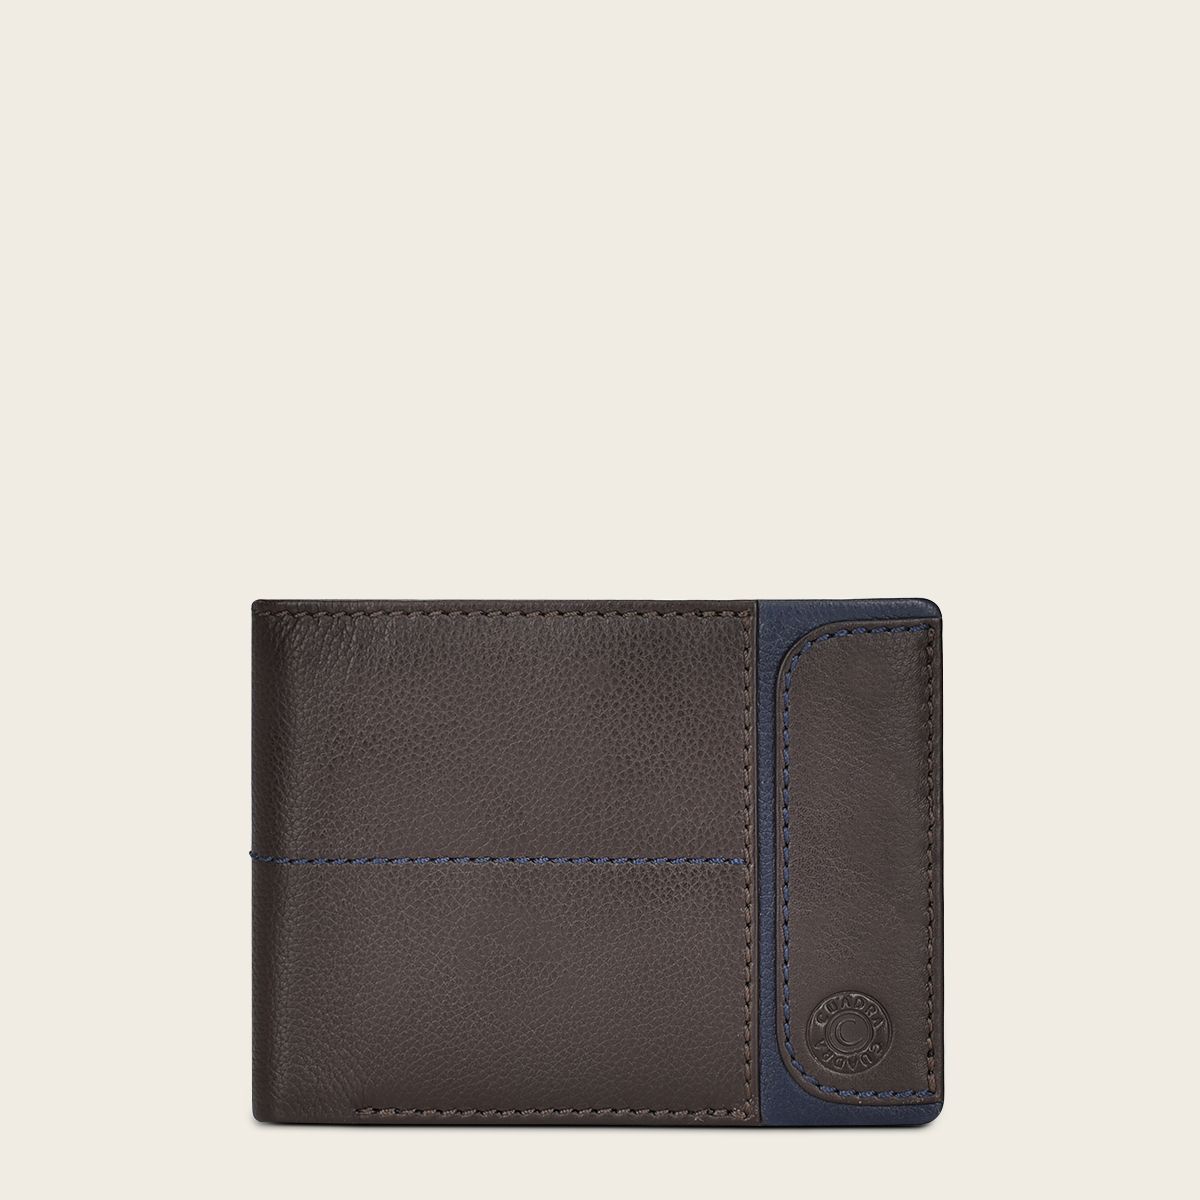 Brown bovine leather wallet with Cuadra monogram